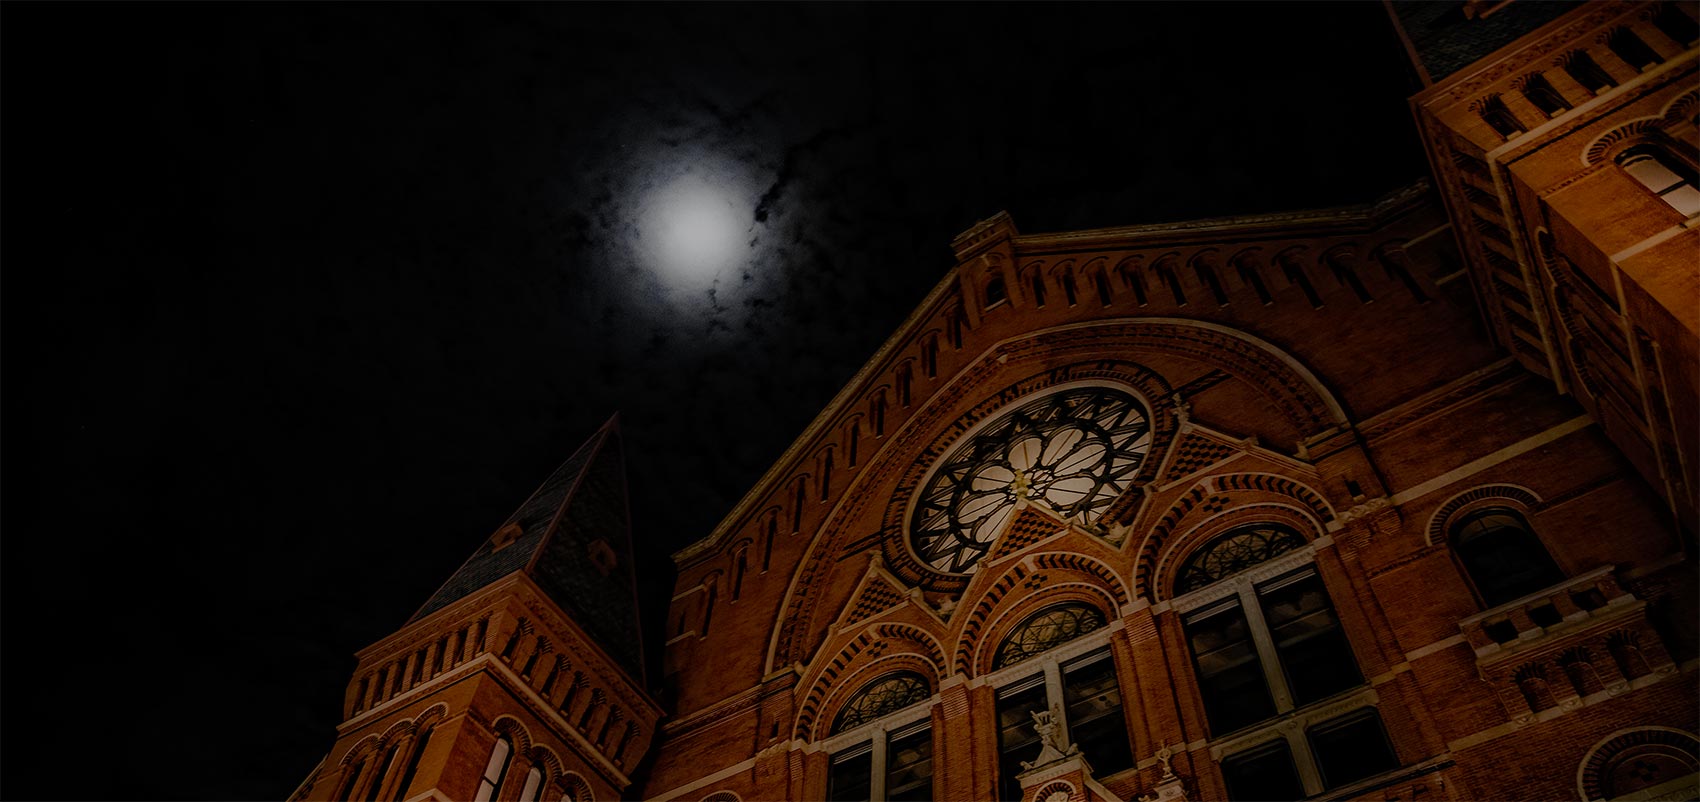 Is Music Hall Haunted - Full Moon Over a Ghostly Image of Cincinnati Music Hall